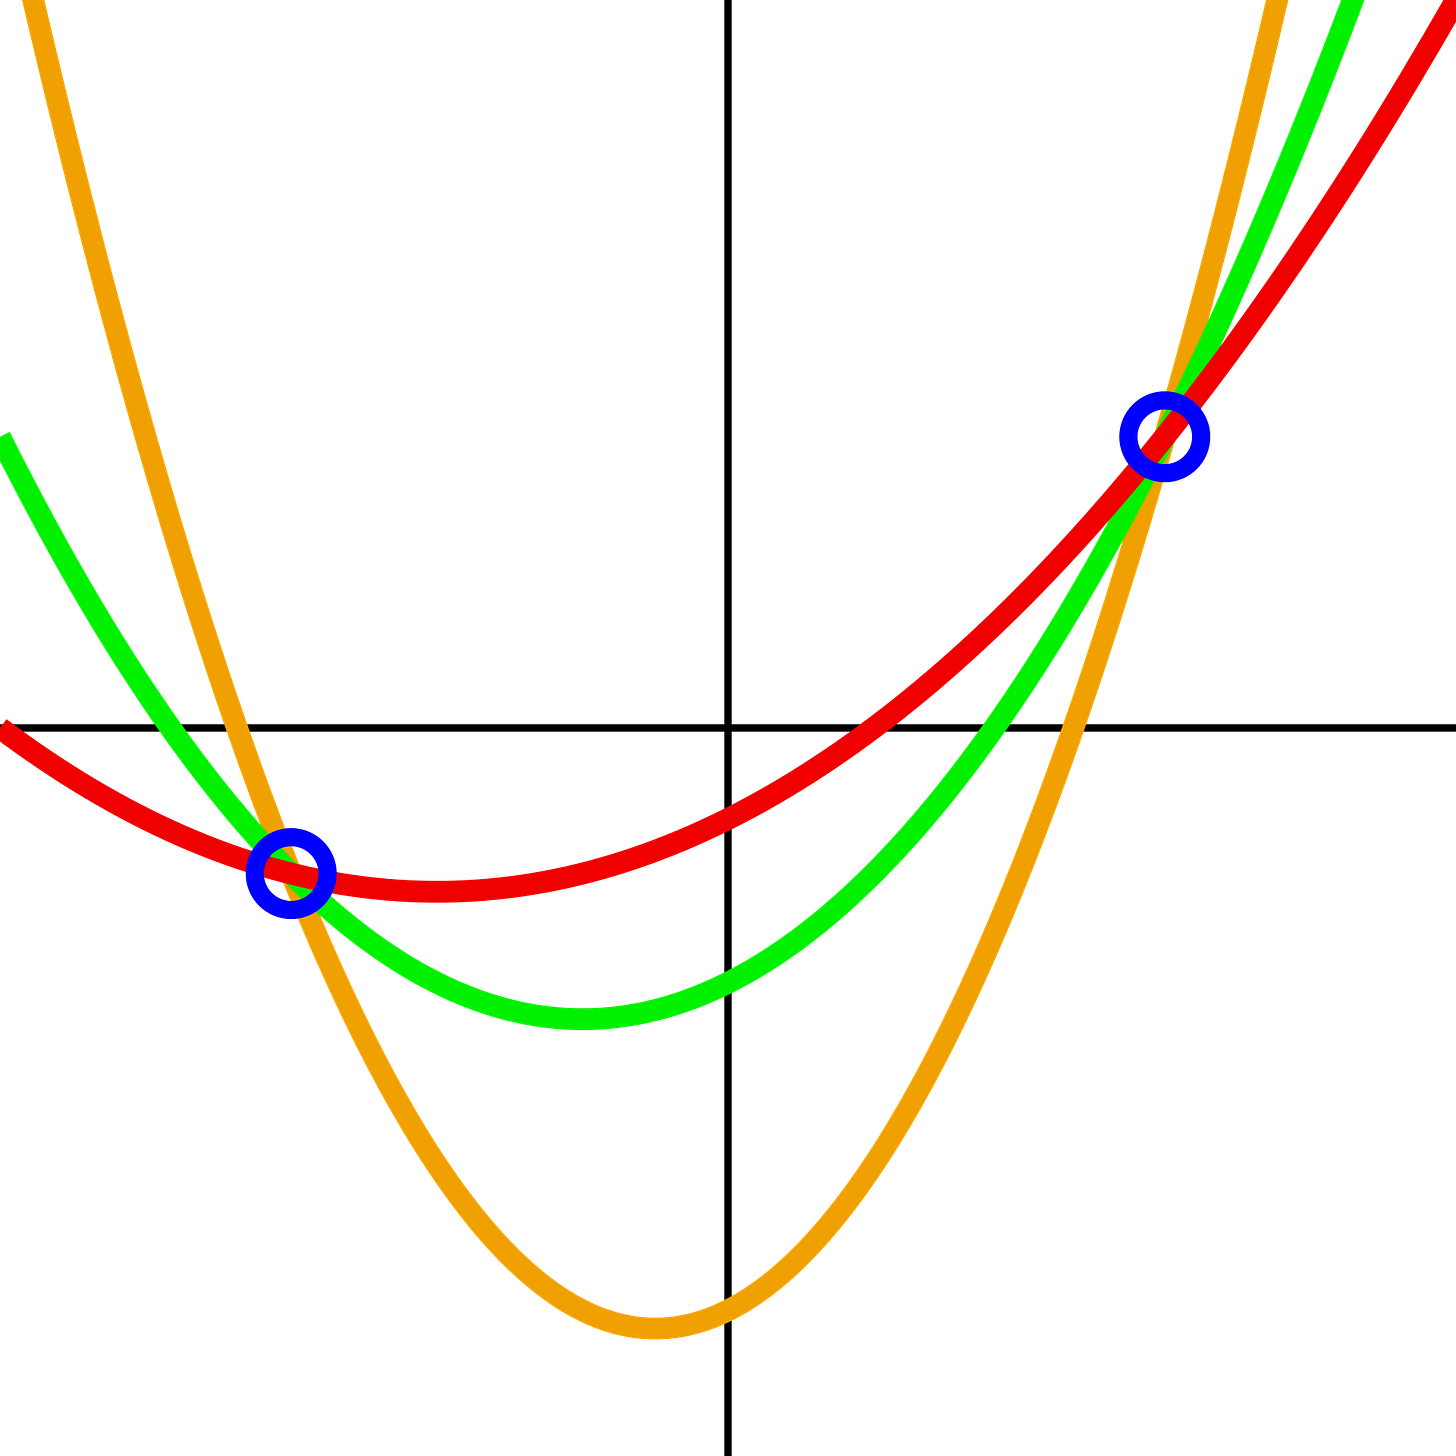 Multiple Parabolas